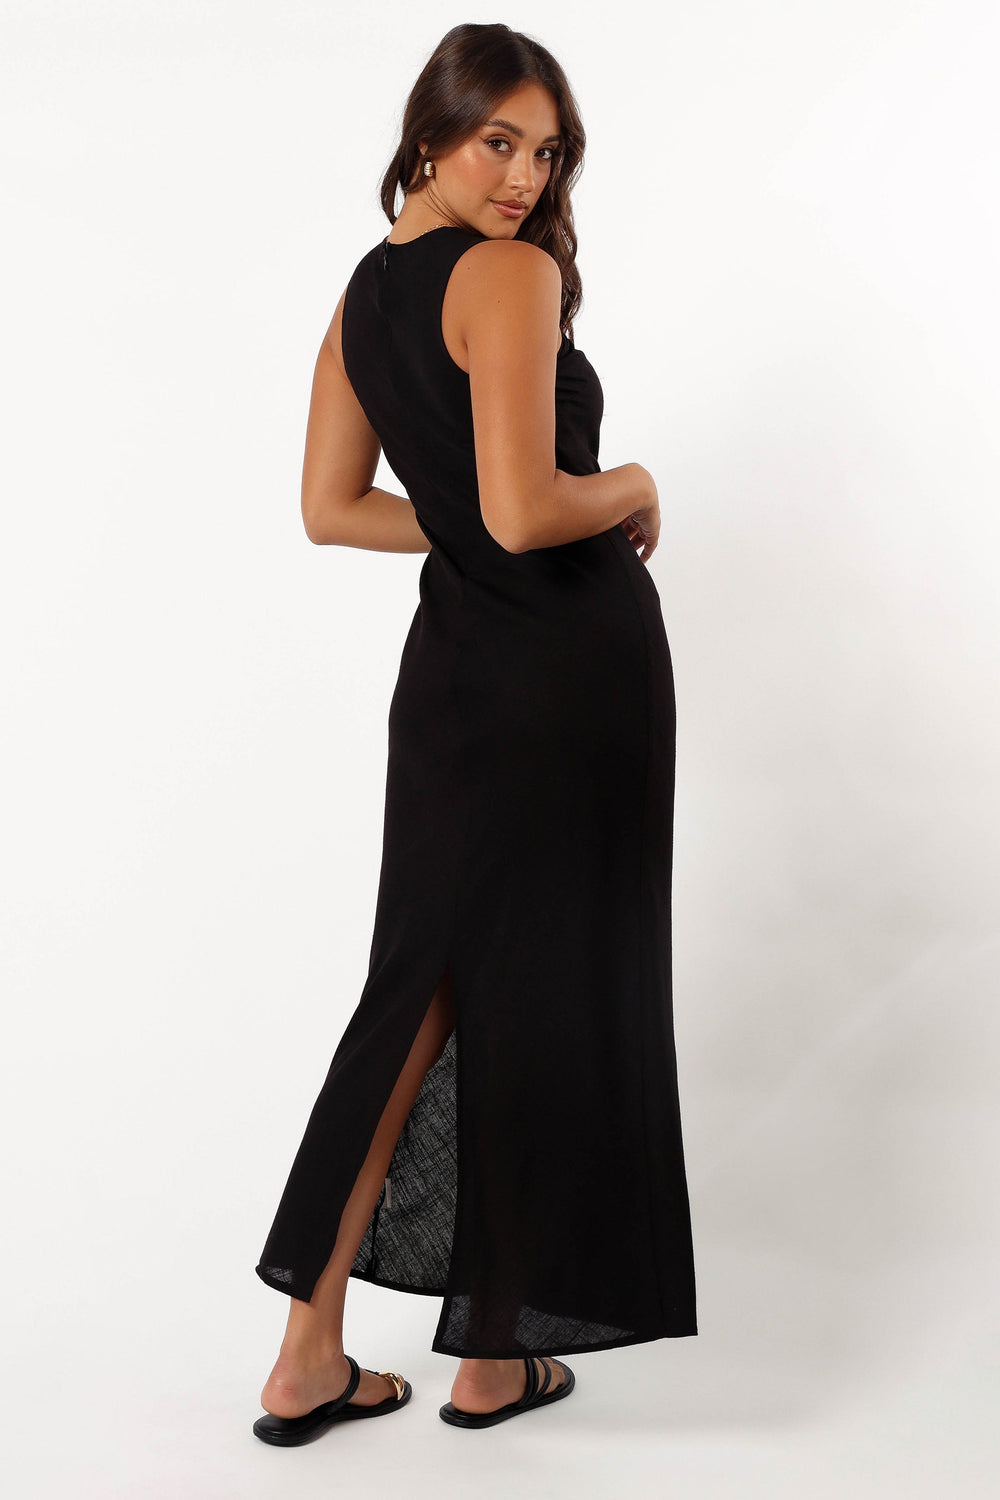 DRESSES @Ellis Maxi Dress - Black (Hold for Winter Essentials)